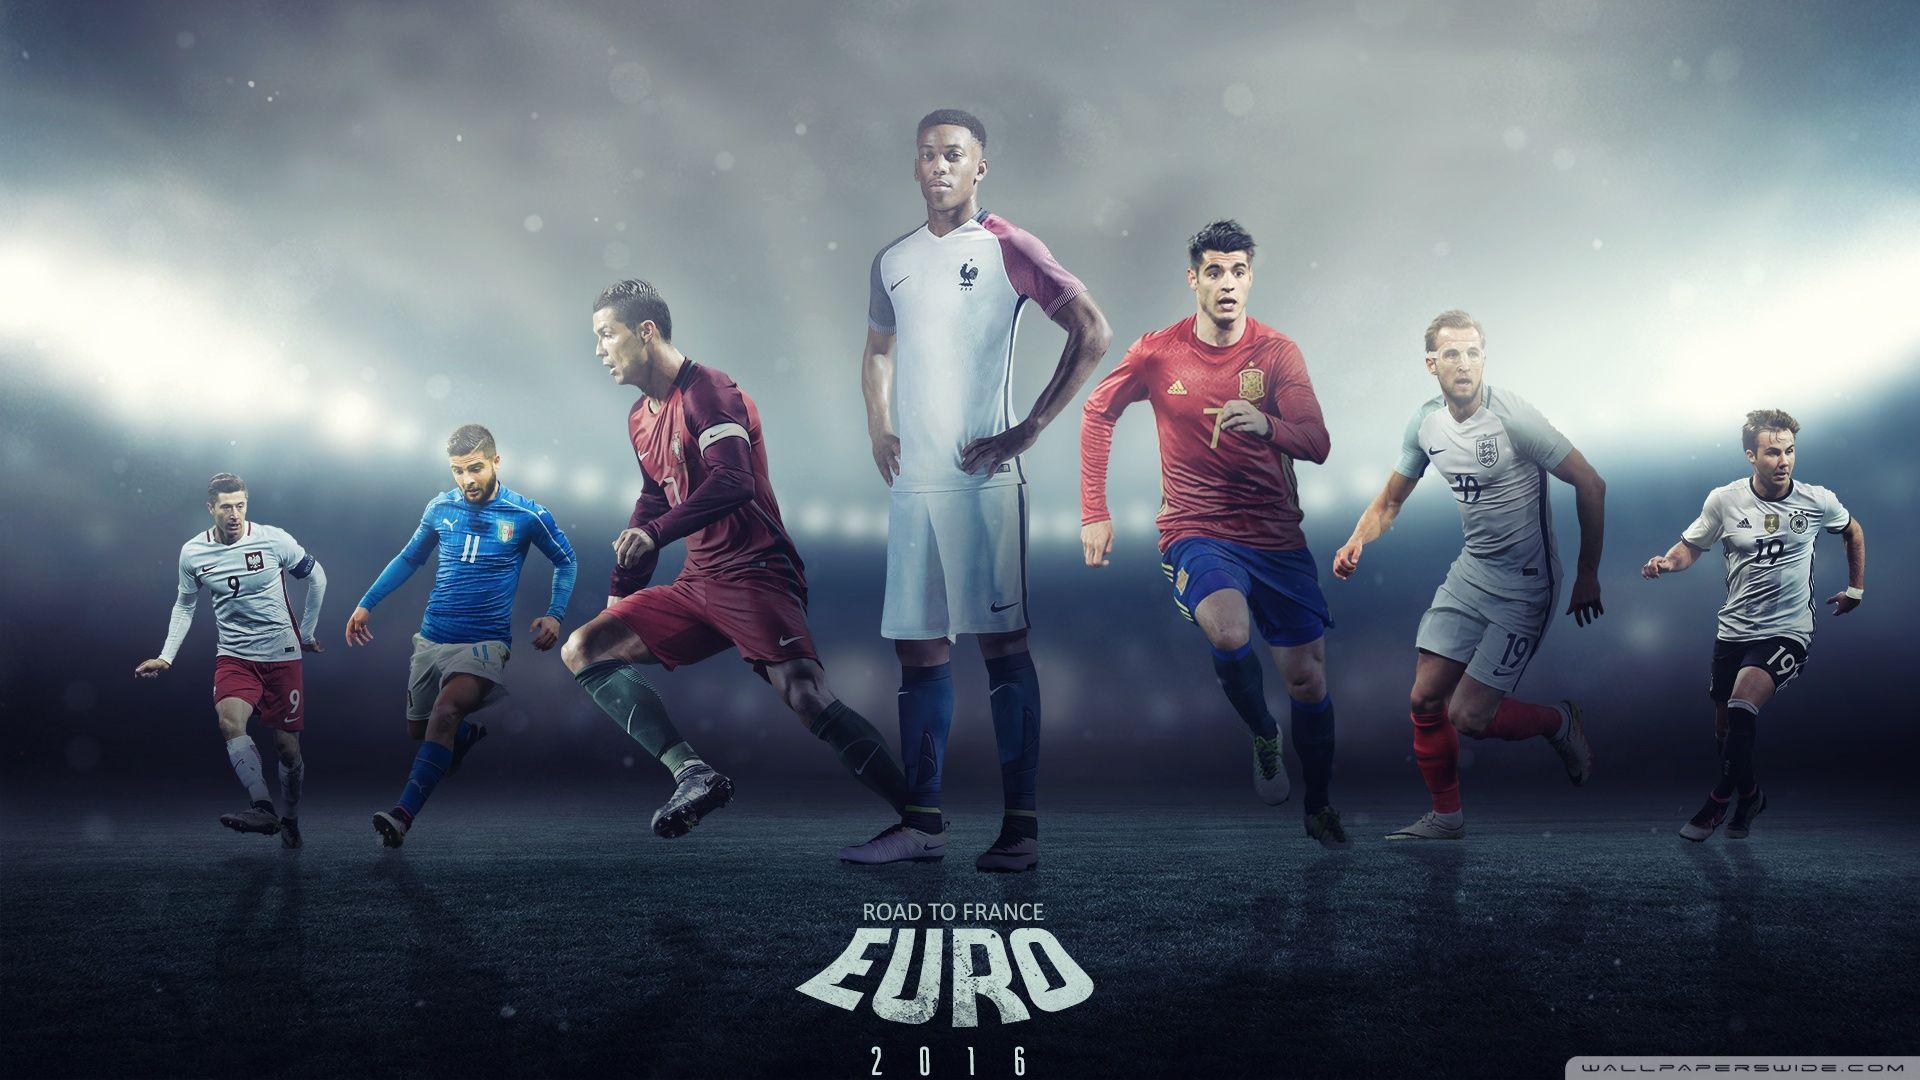 EURO 2016 Players Ultra HD Desktop Background Wallpaper for 4K UHD TV, Widescreen & UltraWide Desktop & Laptop, Tablet